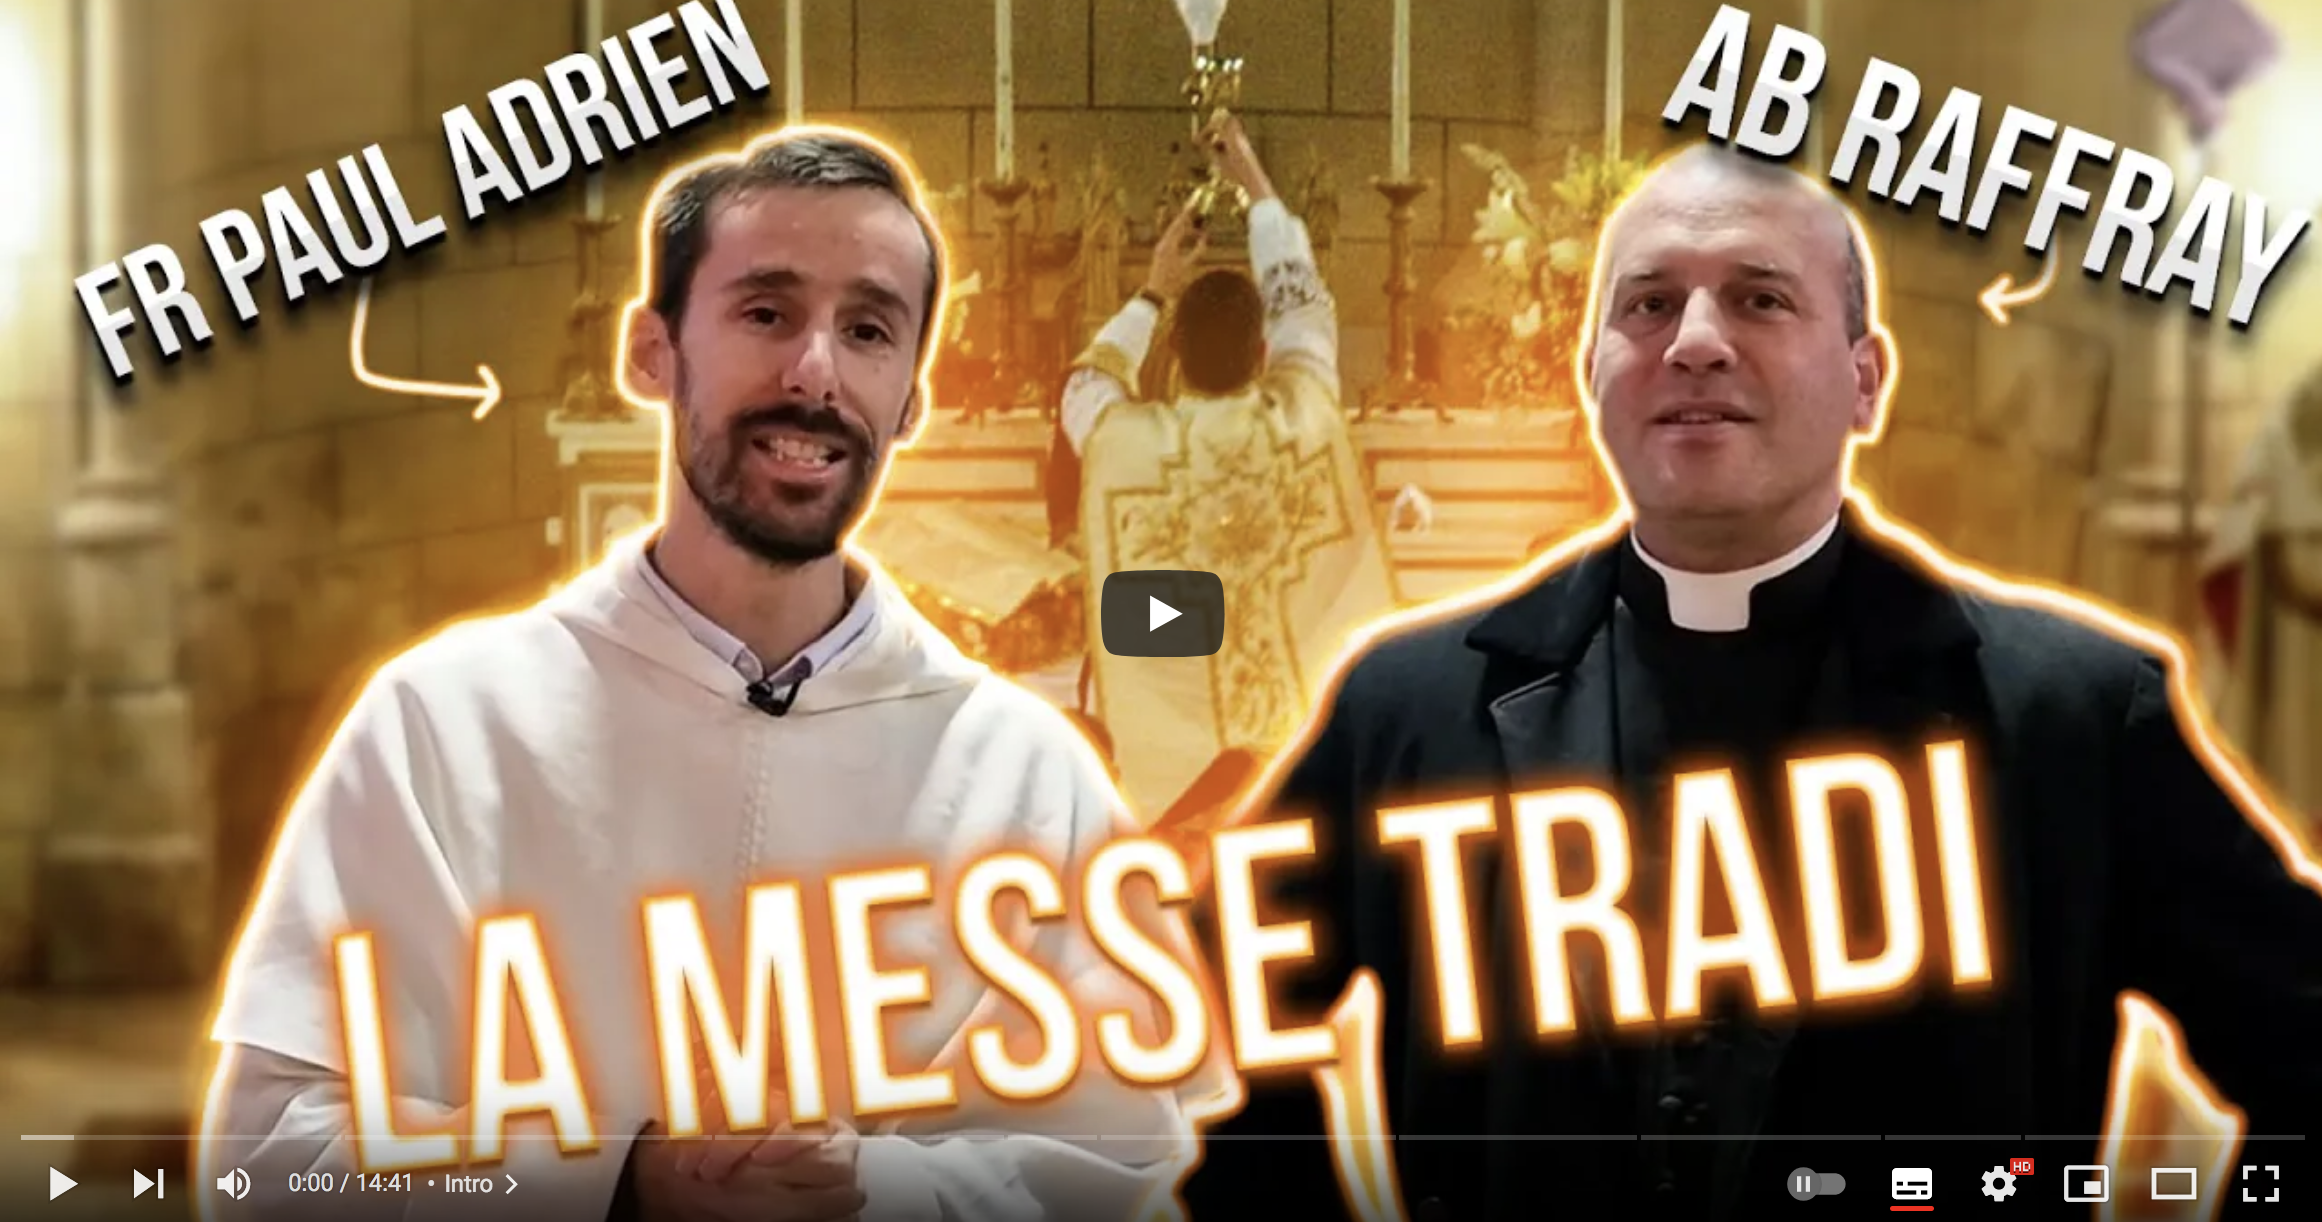 La messe “tradi” (tridentine) avec l’abbé Raffray (VIDÉO)